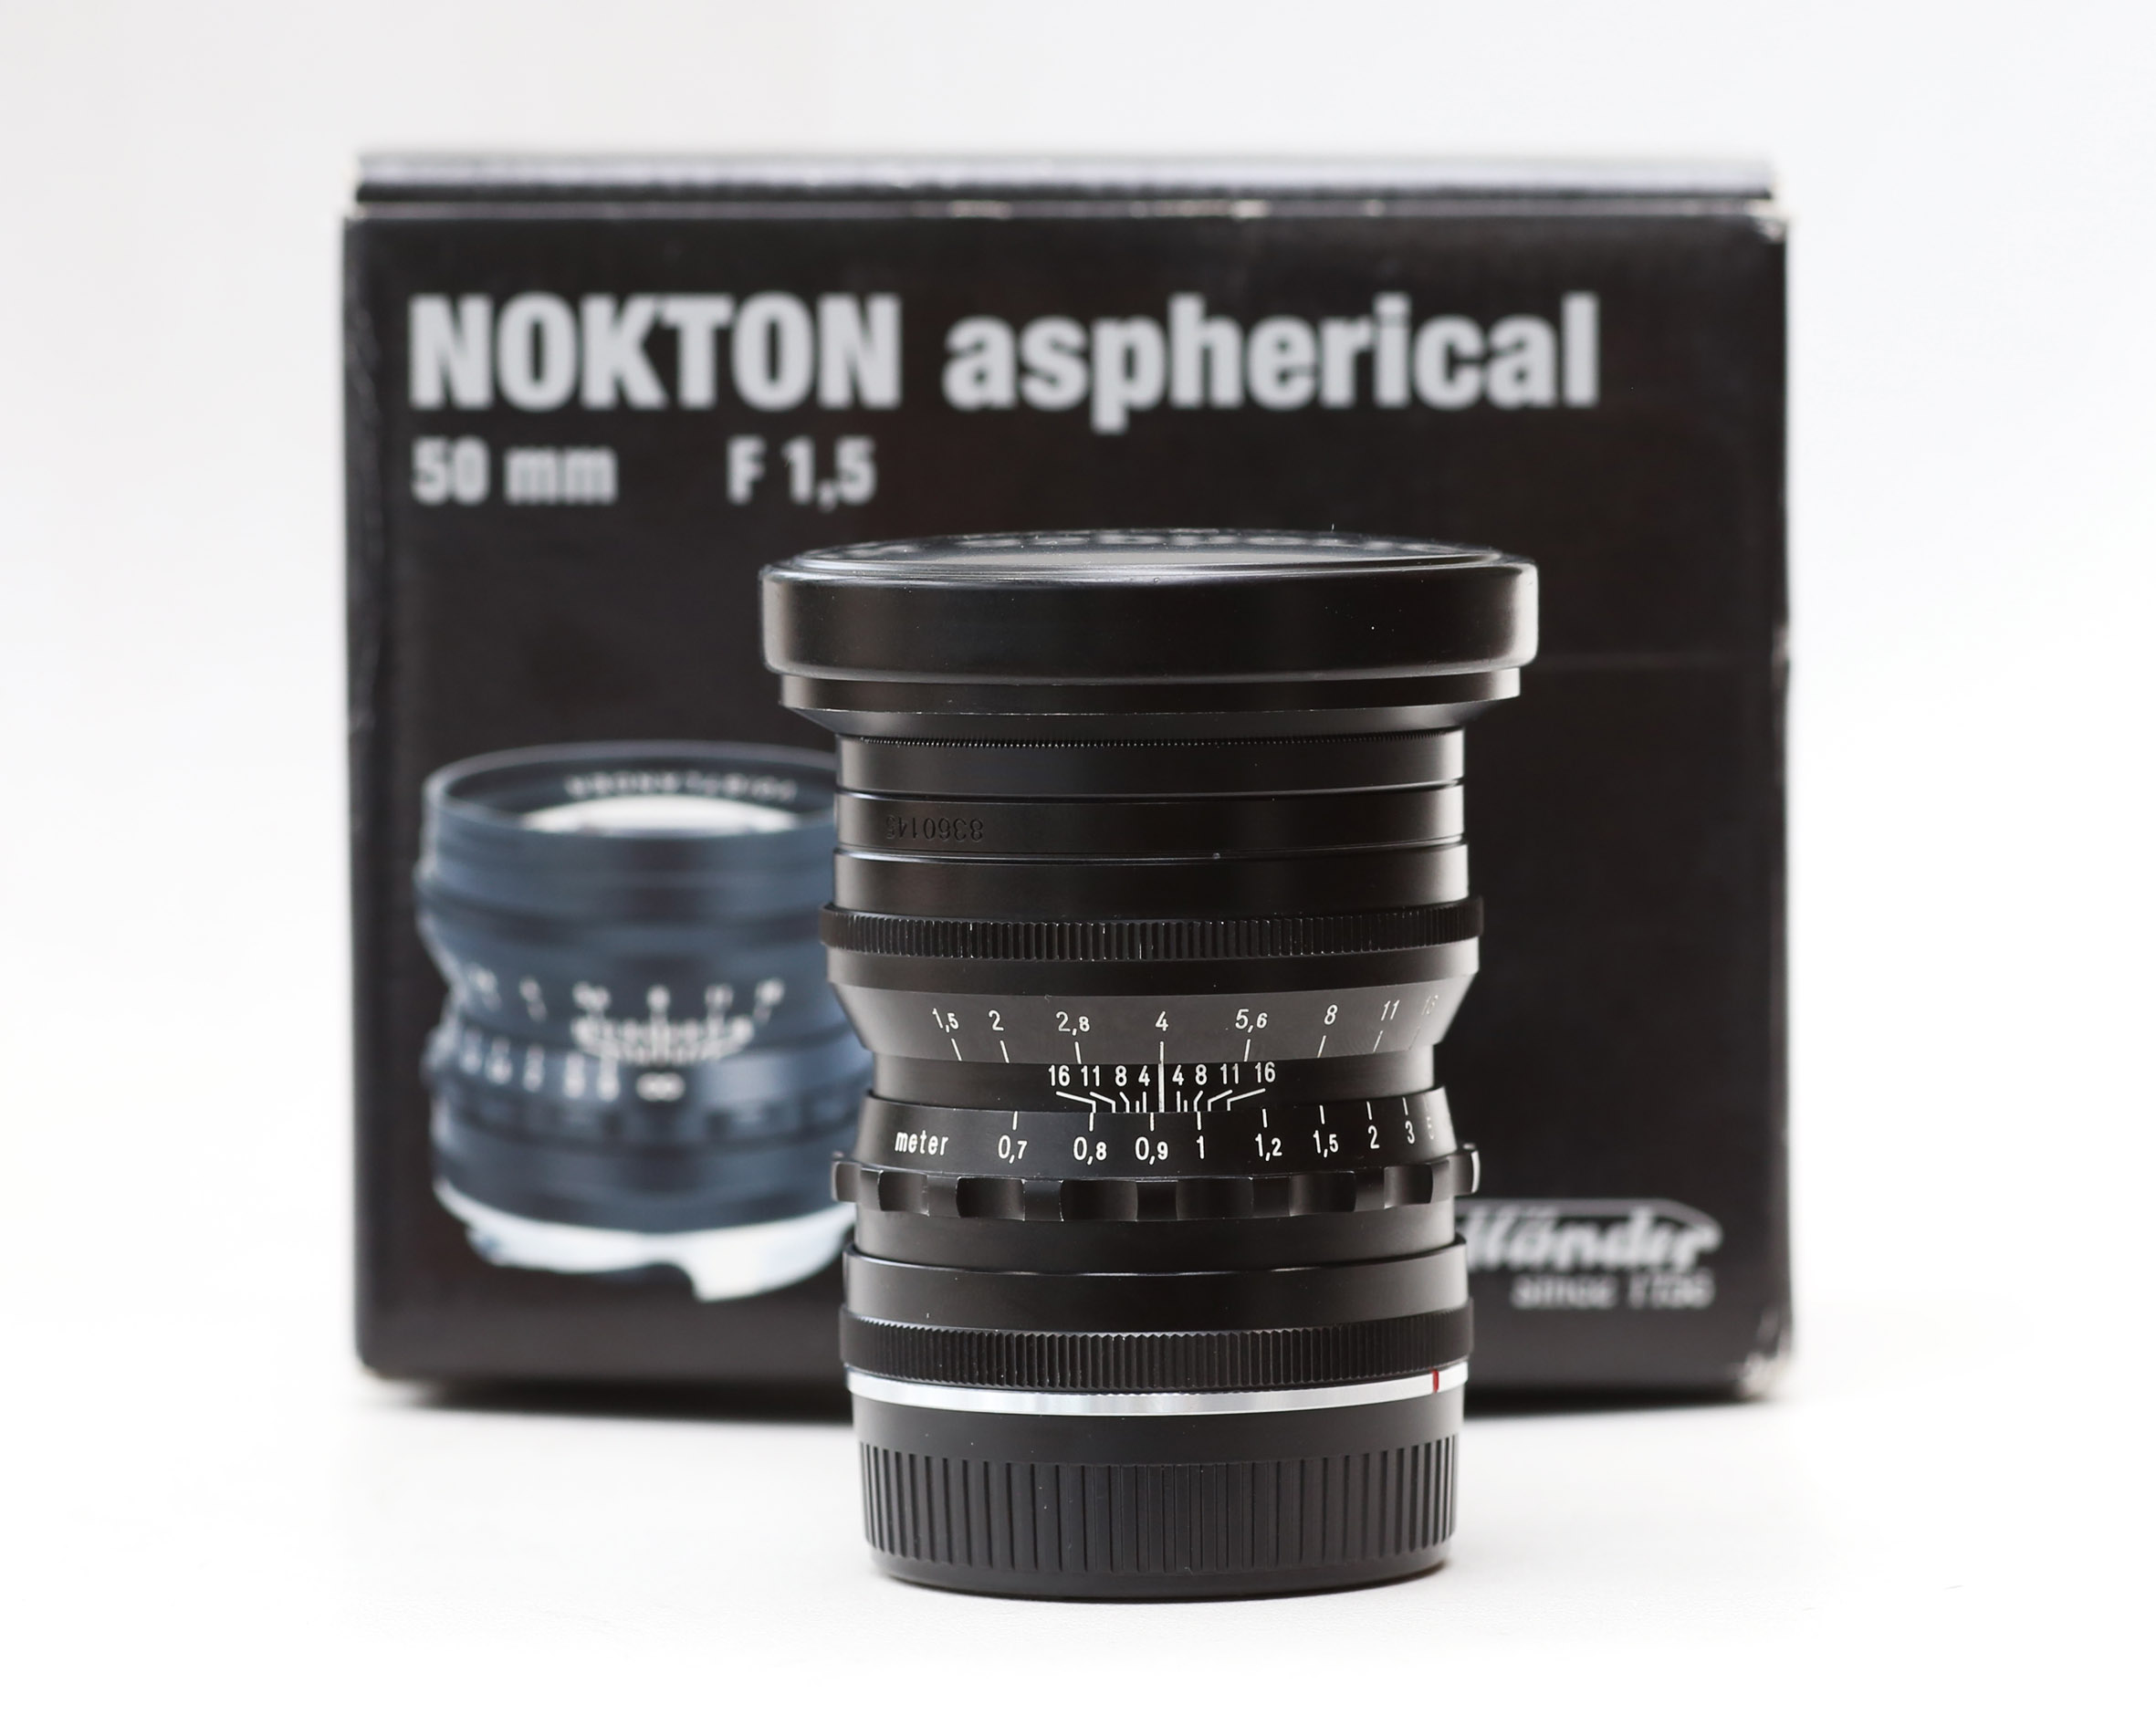 Ống Kính Voigtlander 50mm F/1.5 VM Ultron Black for Leica M